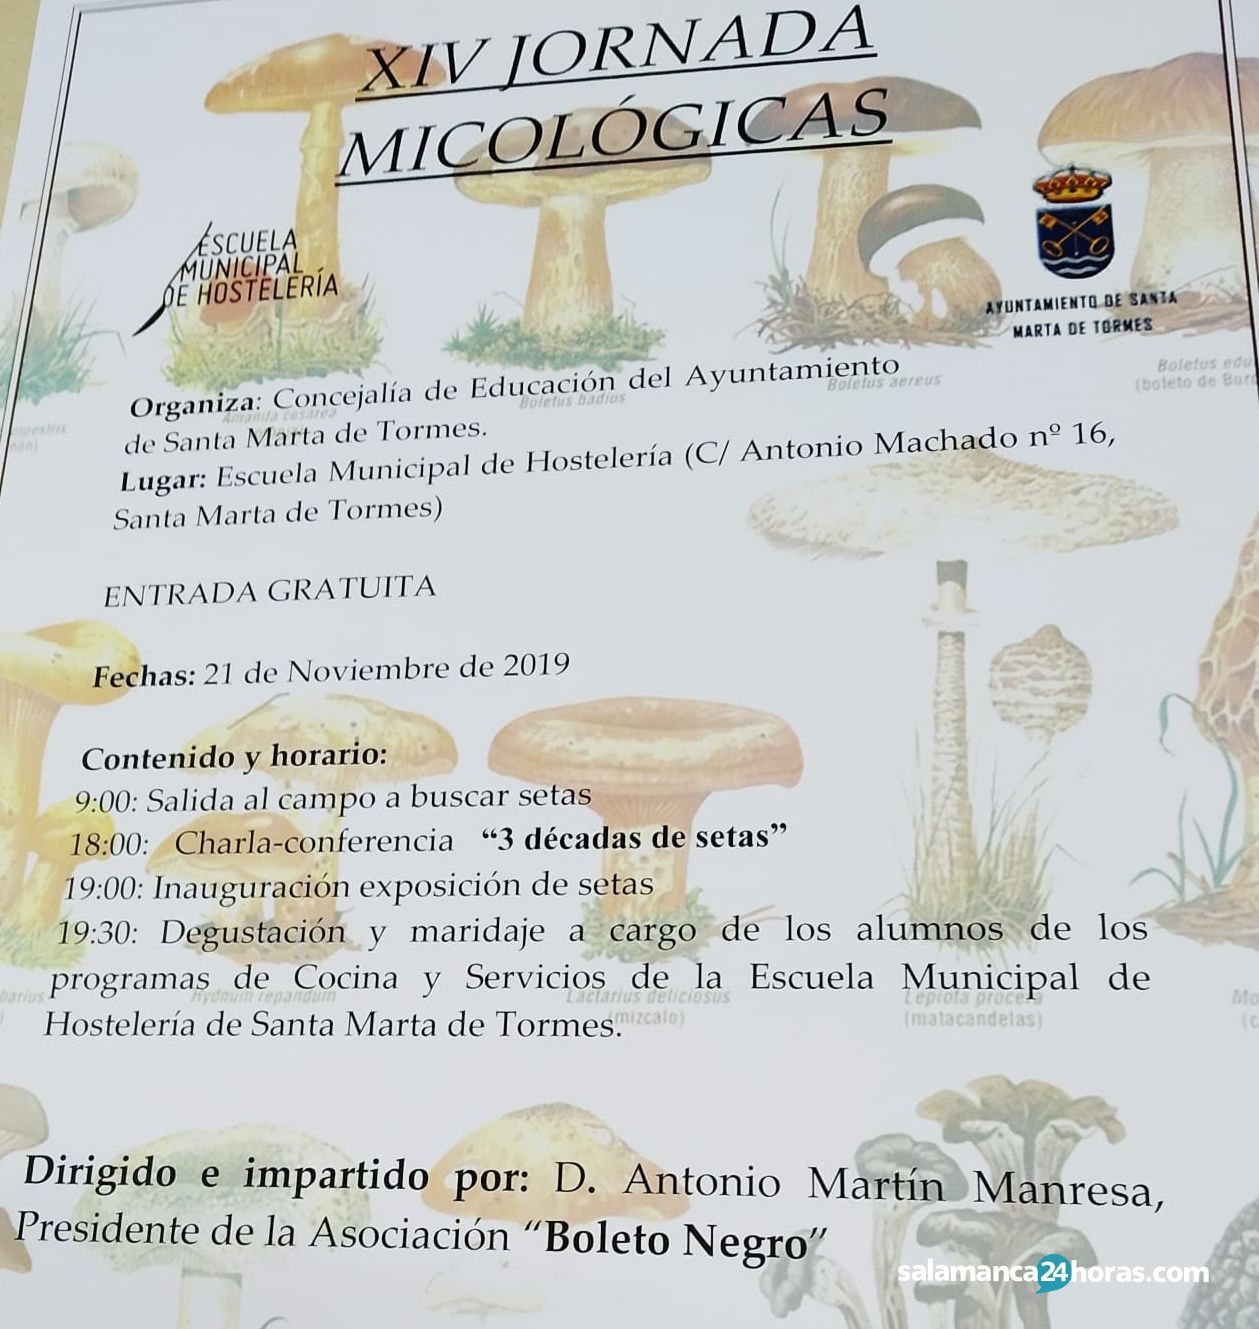  Jornadas micologicas Santa Marta de Tormes  (3) 